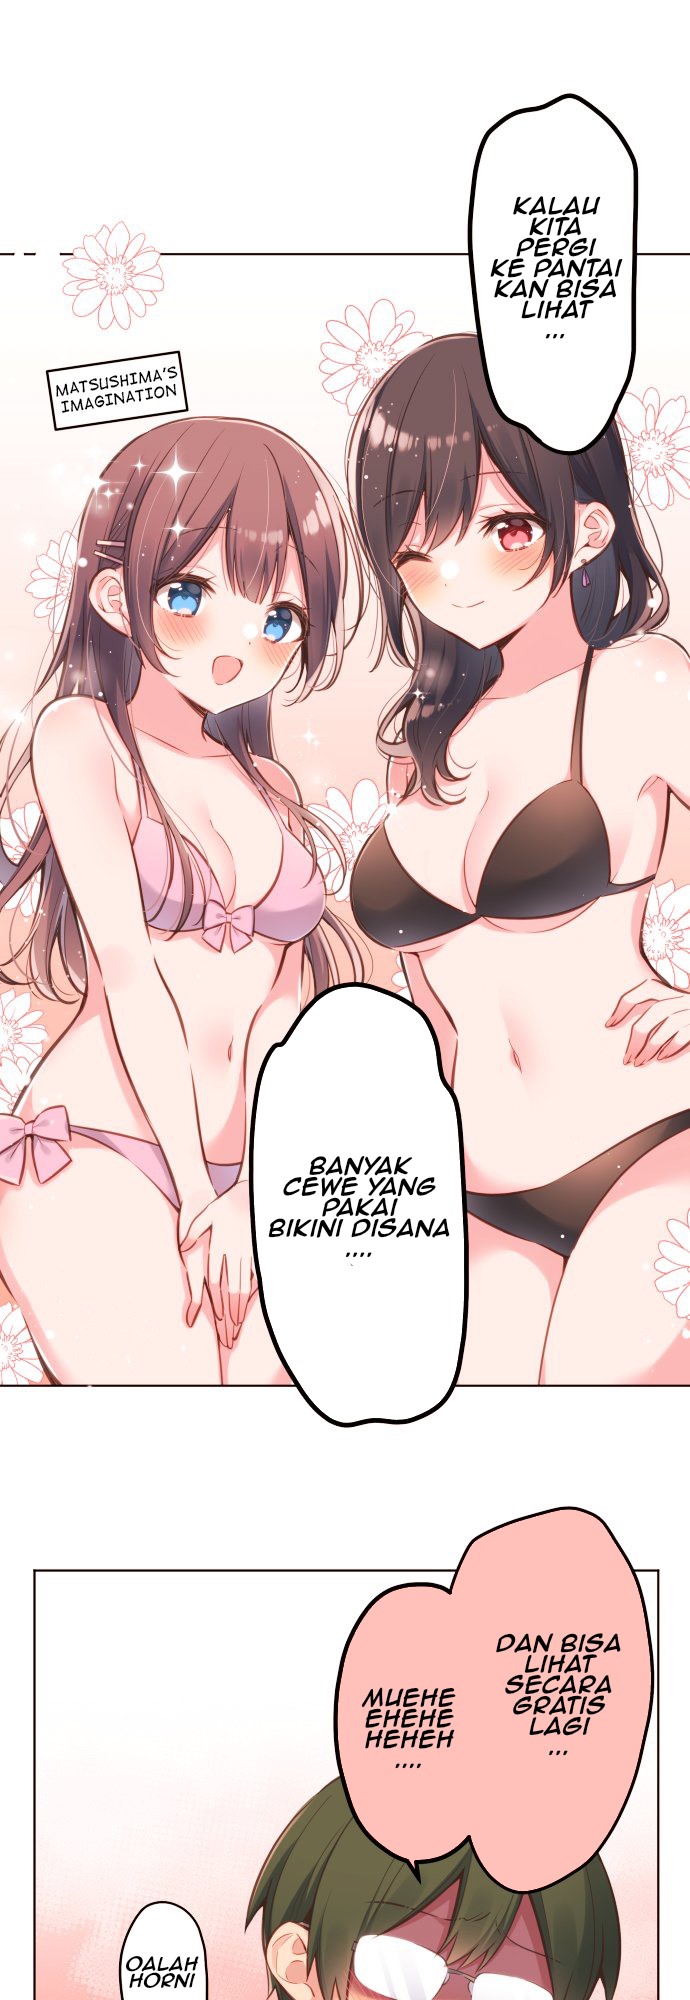 Waka-chan Is Flirty Again Chapter 31 9